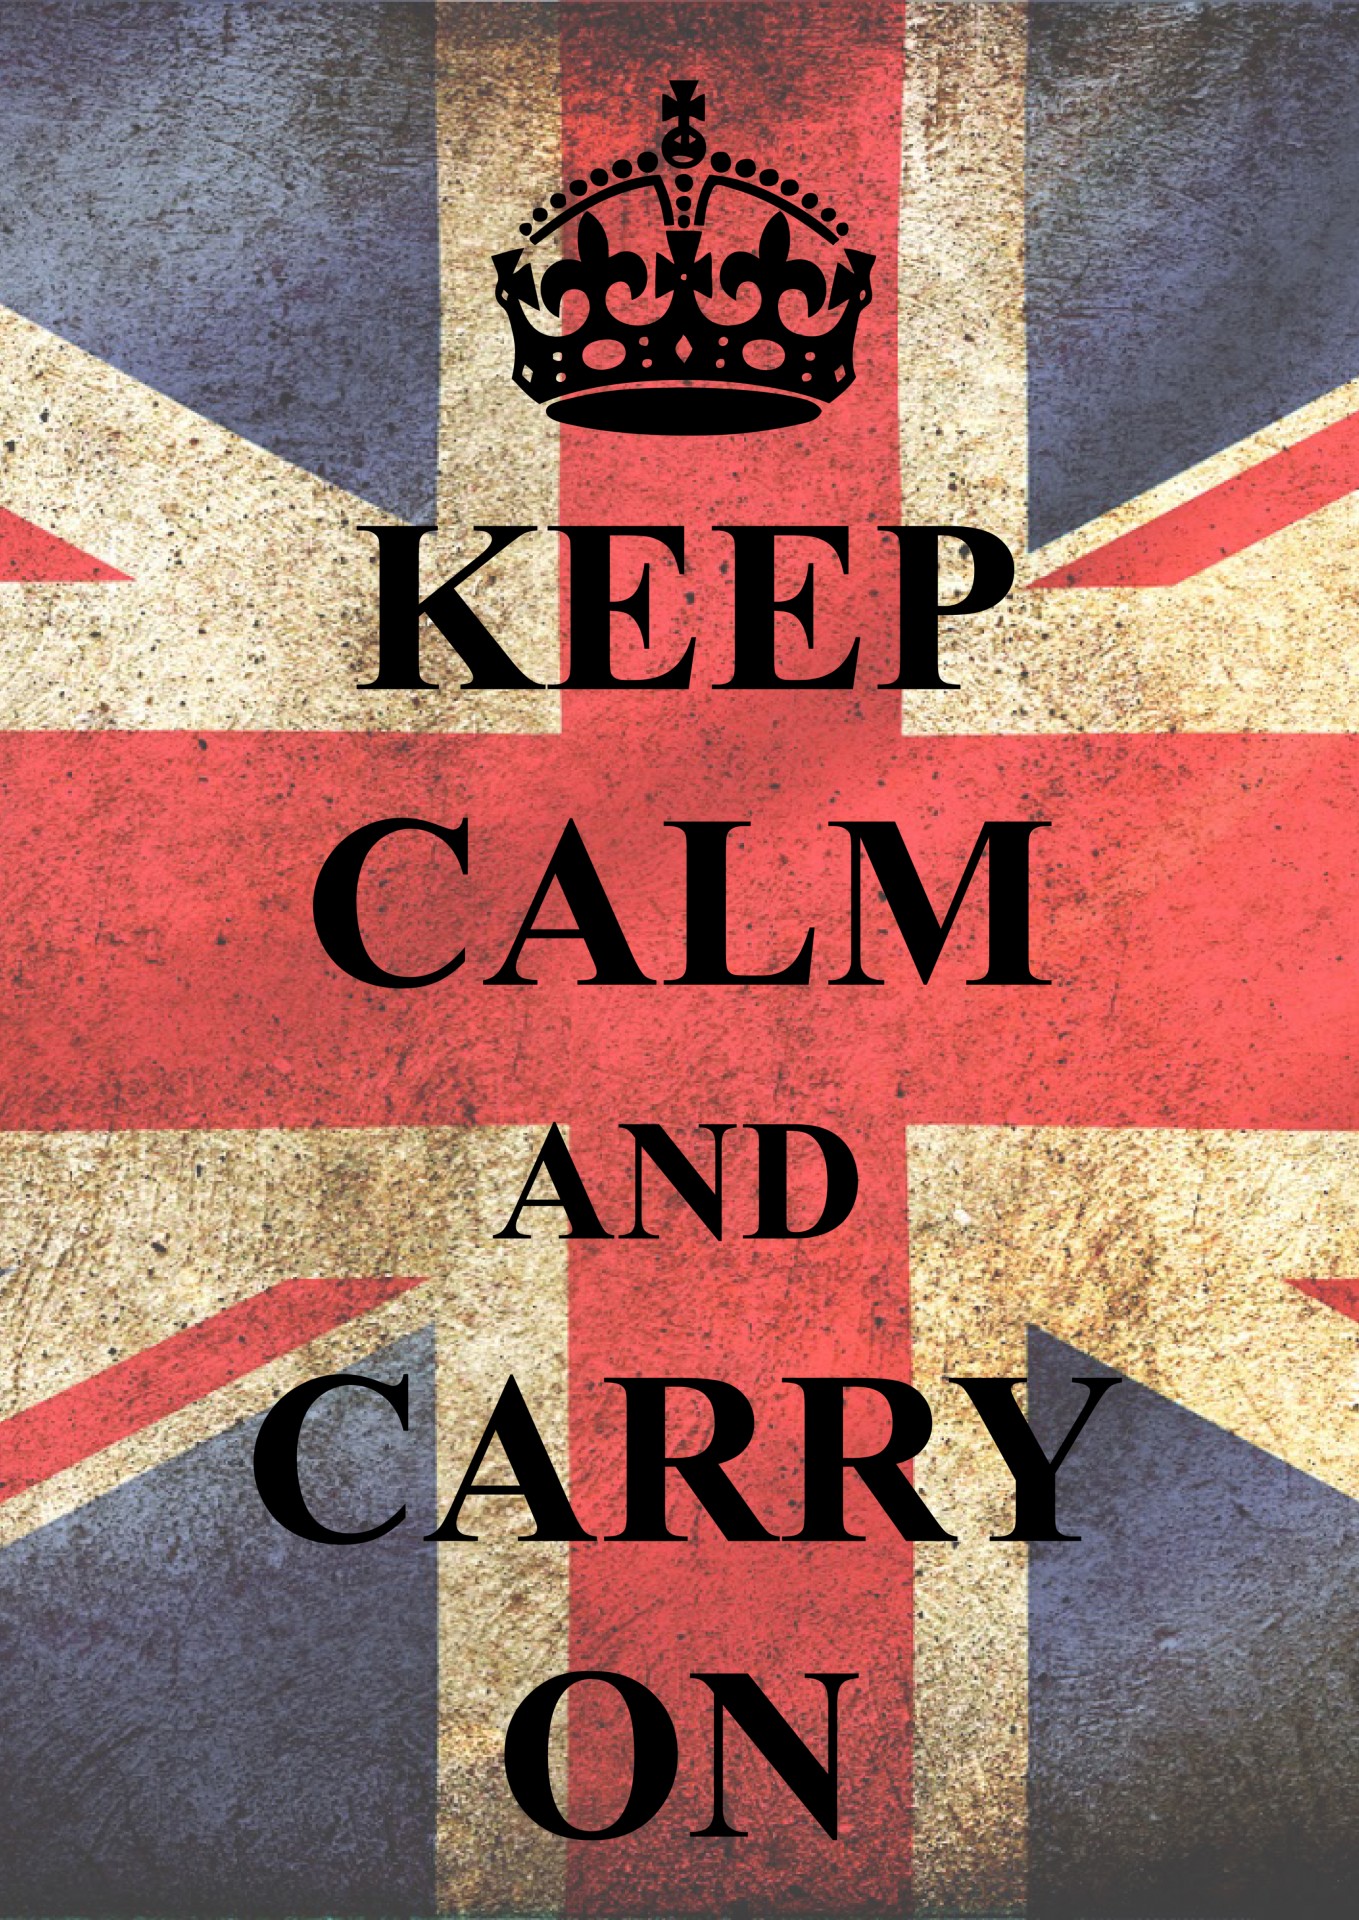 who said keep calm and carry on